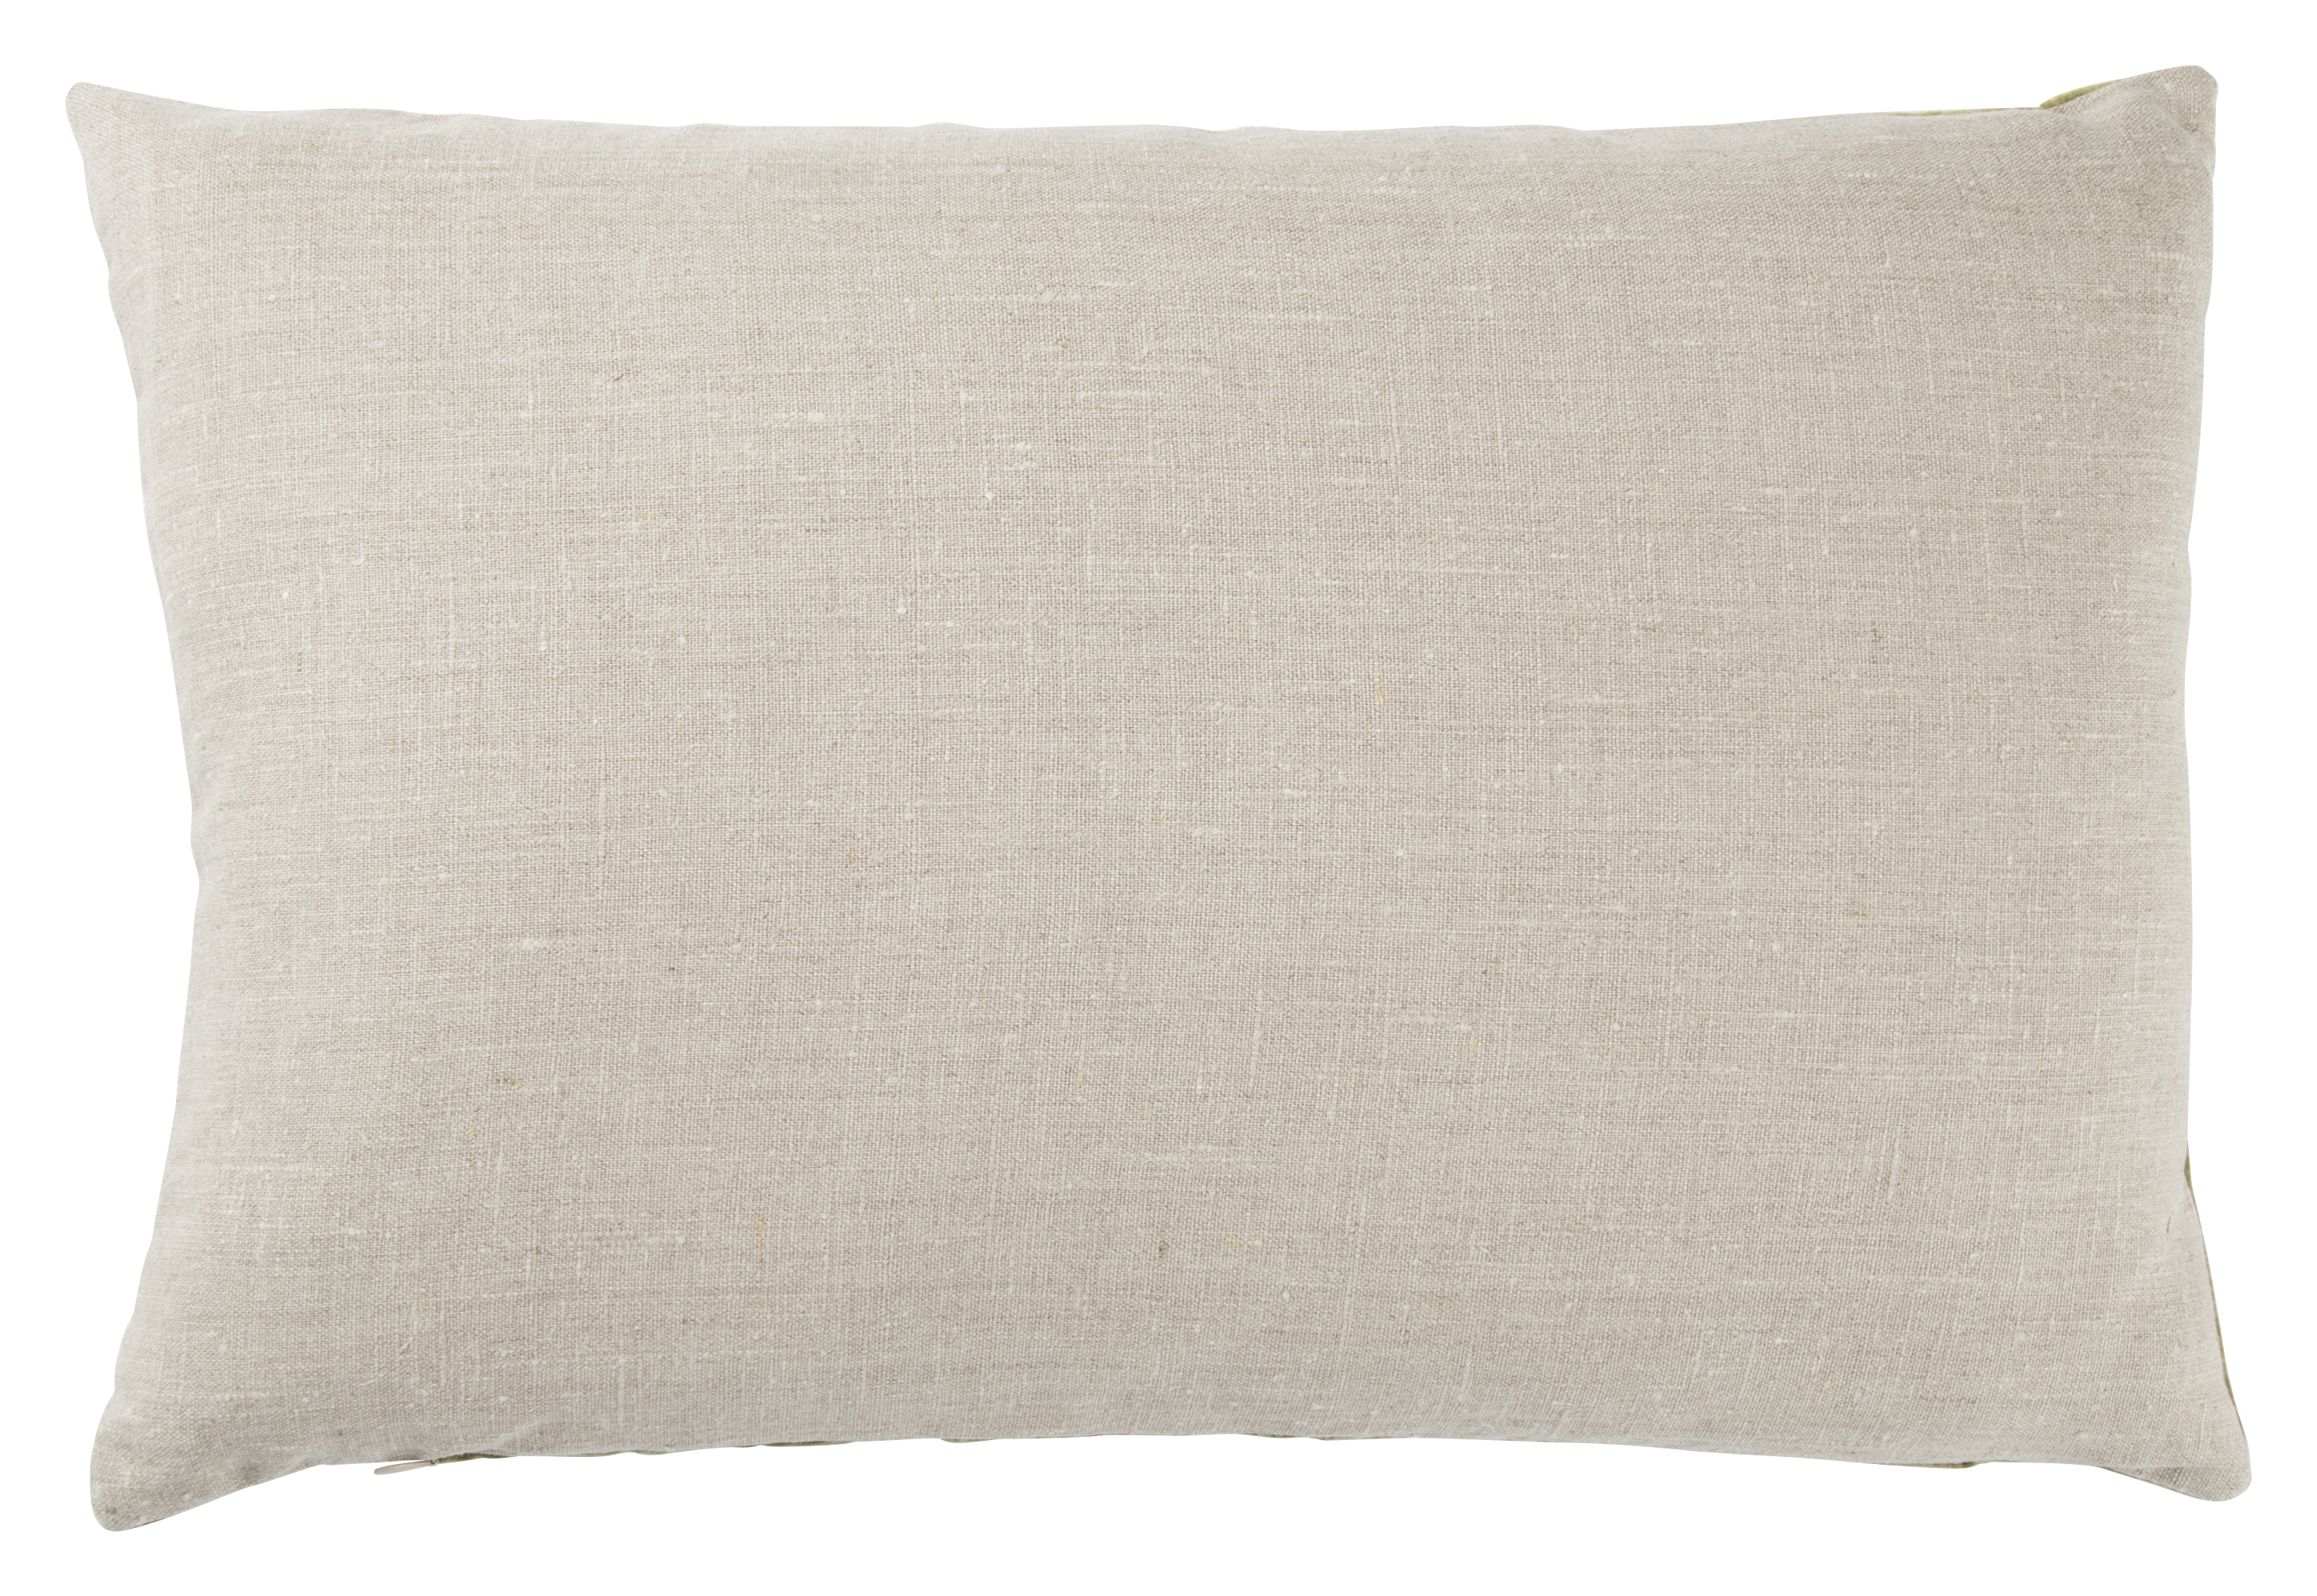 Design (US) Olive 16"X24" Pillow - Image 1